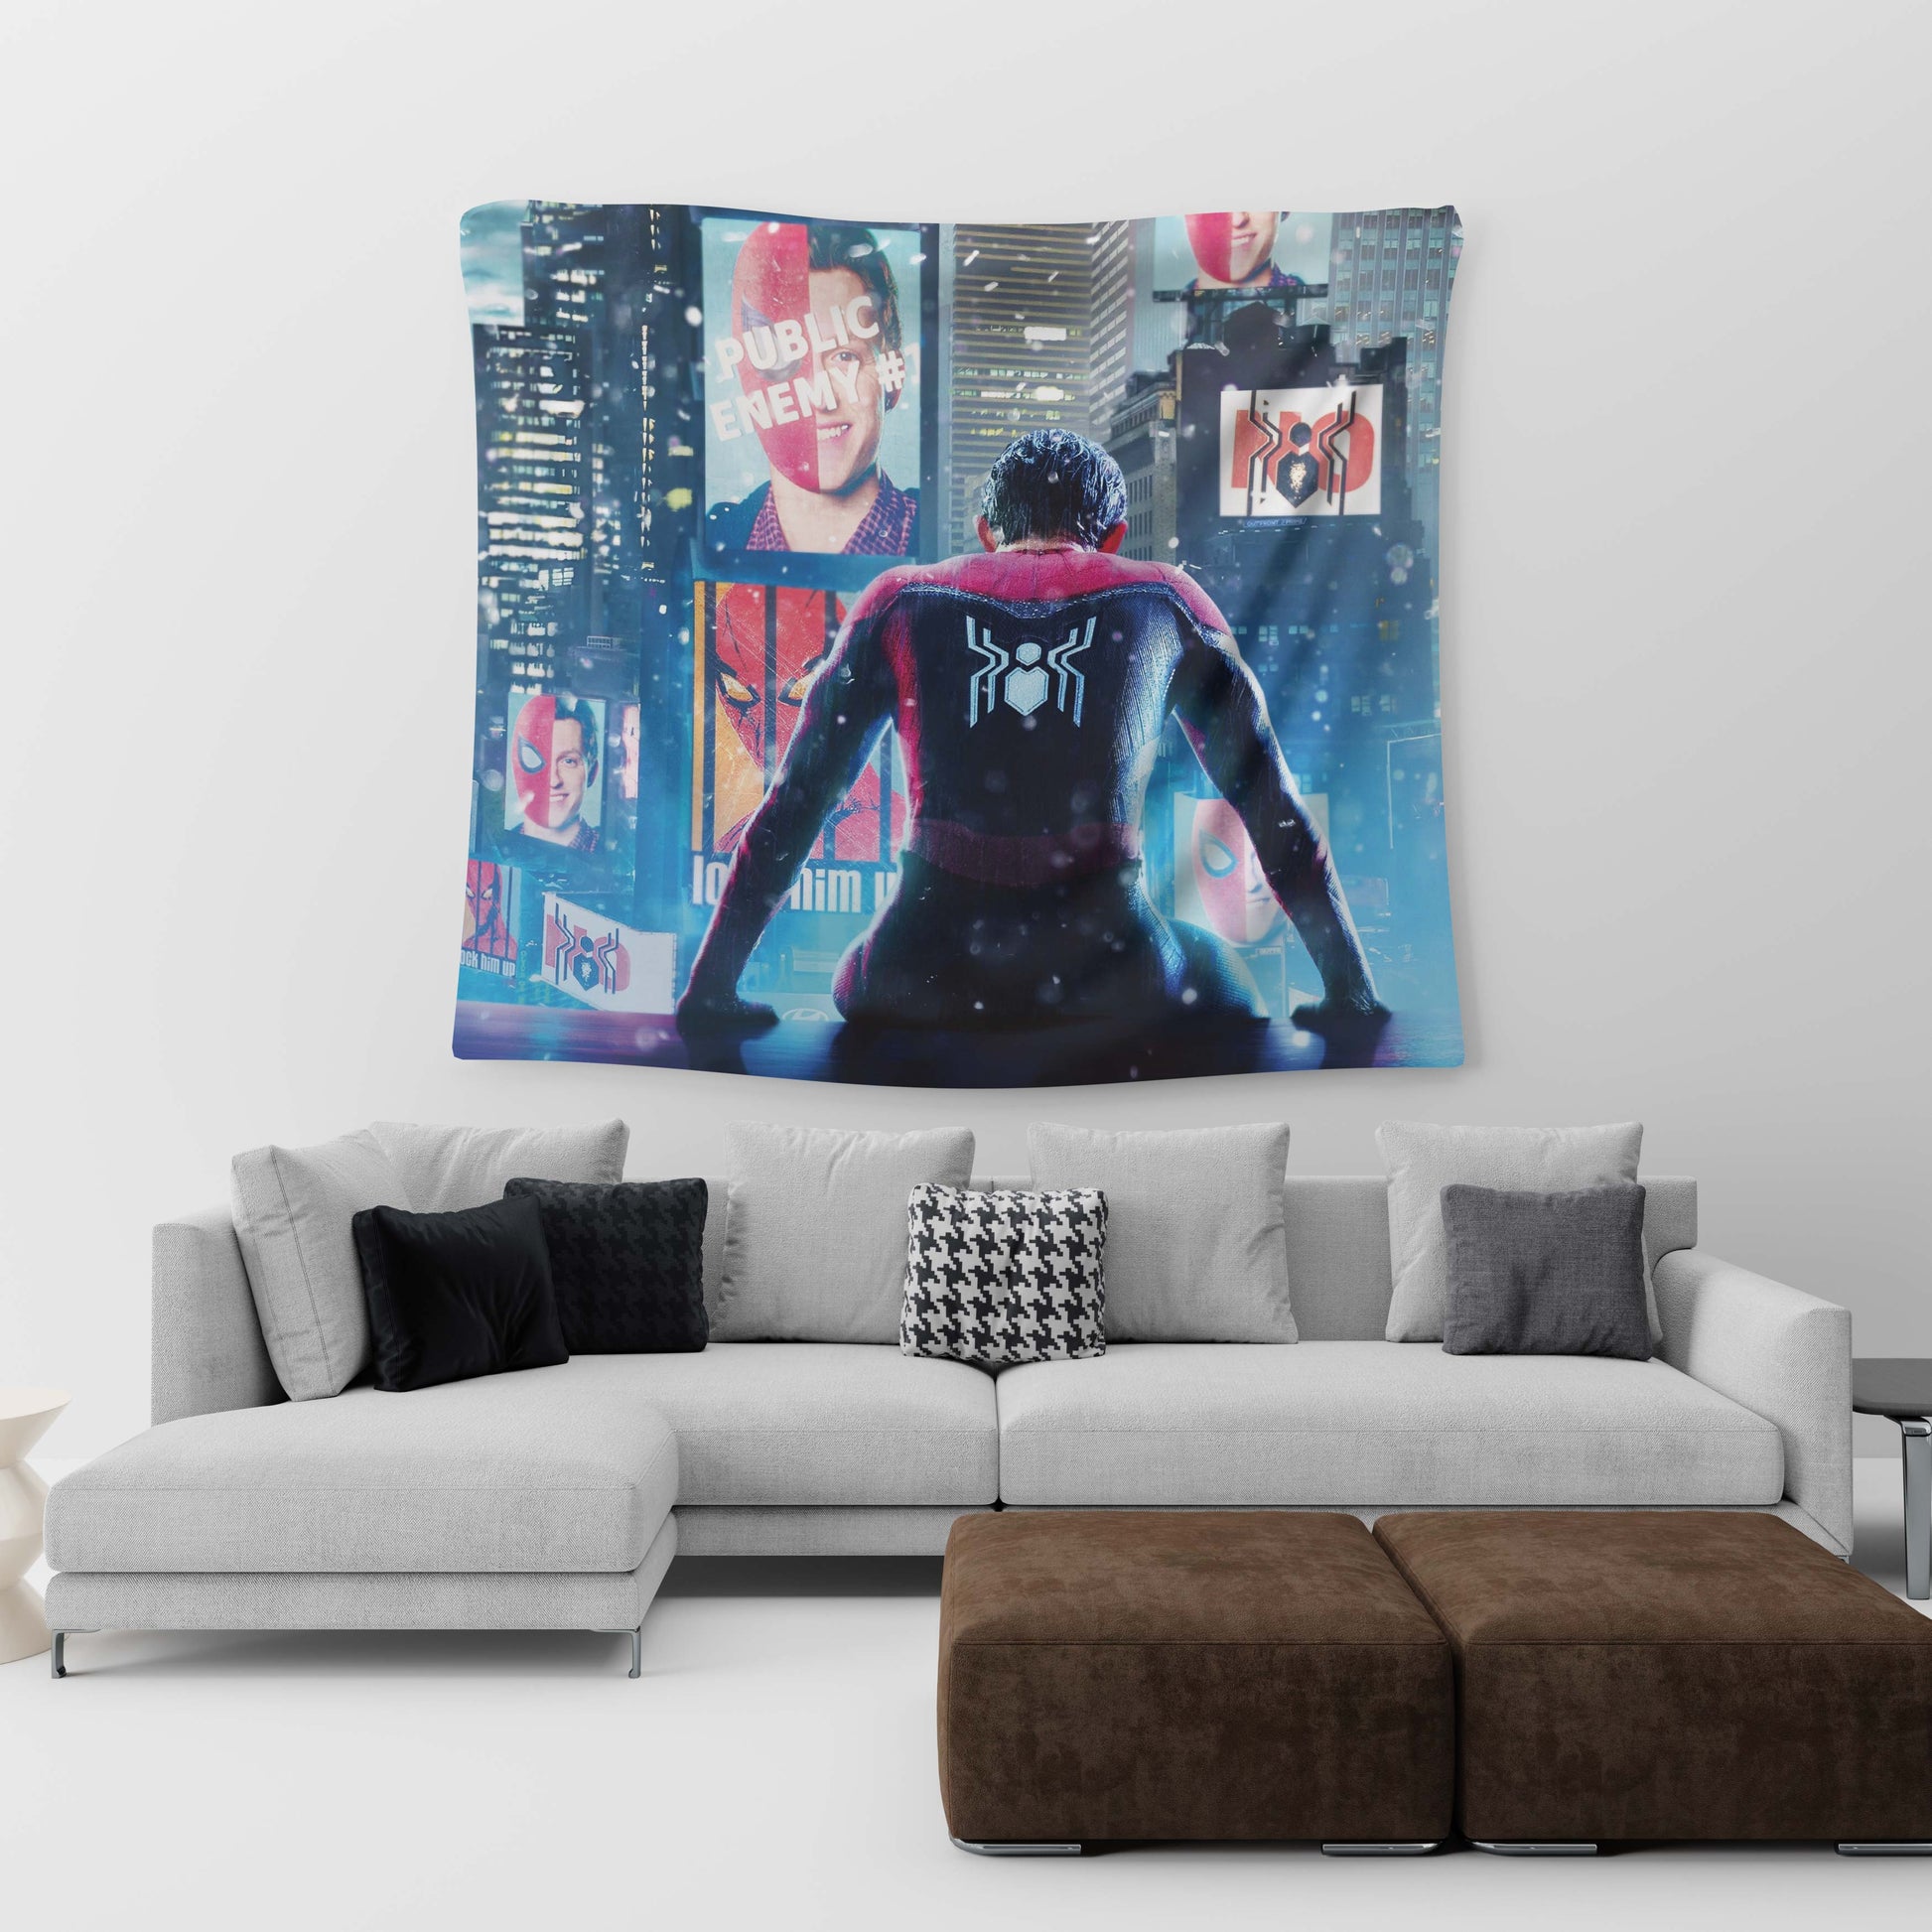 Peter Parker AKA Spider-Man Tapestry trendy home